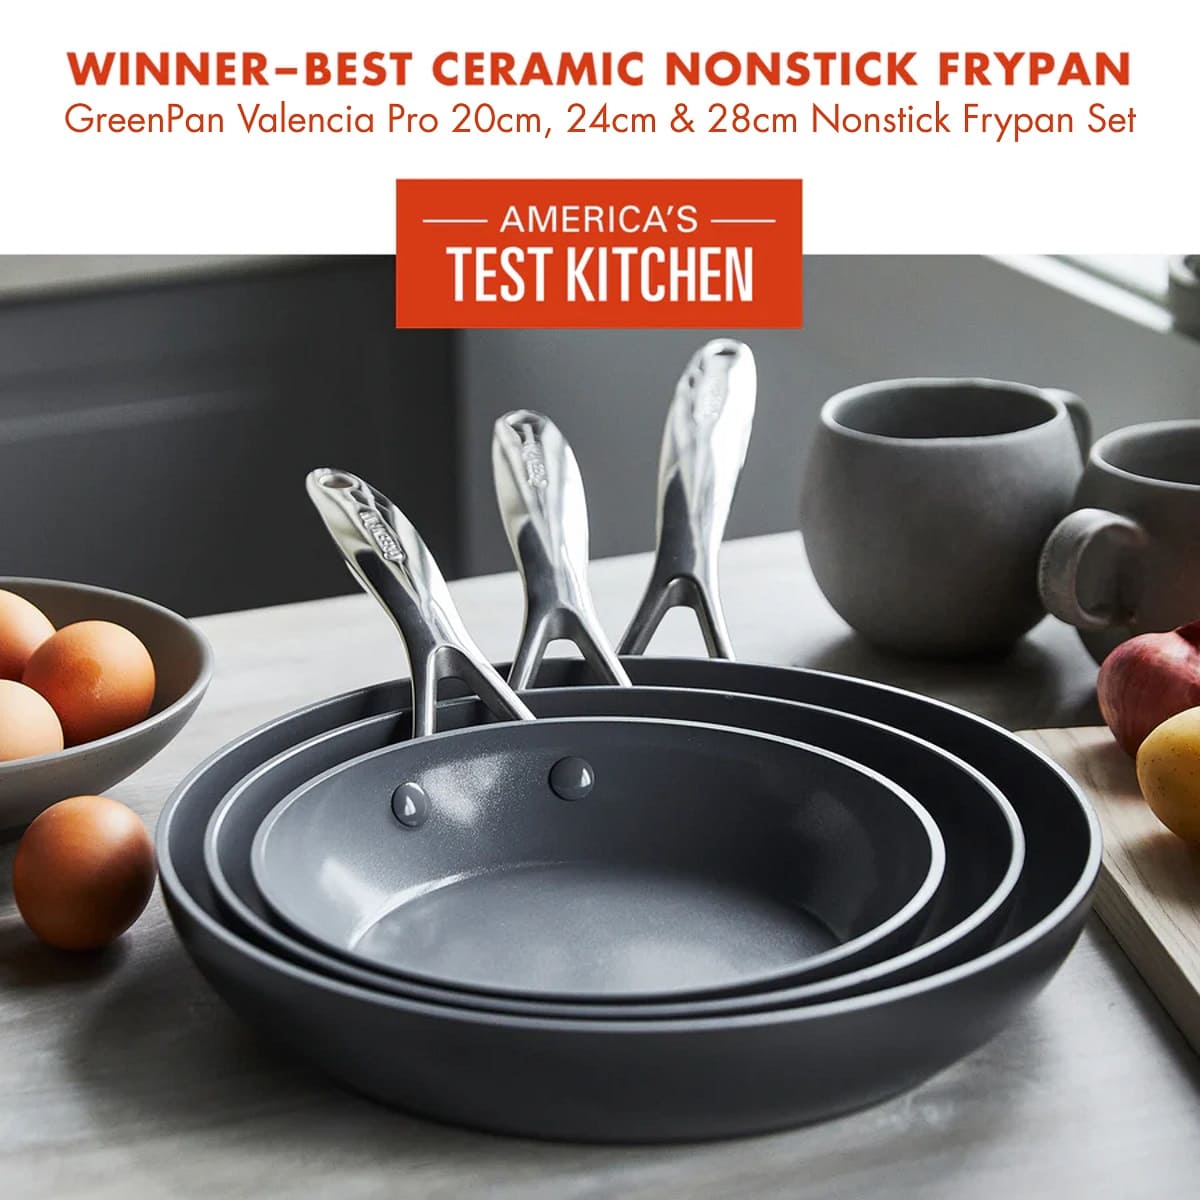 Best Ceramic Cookware Australia - GreenPan